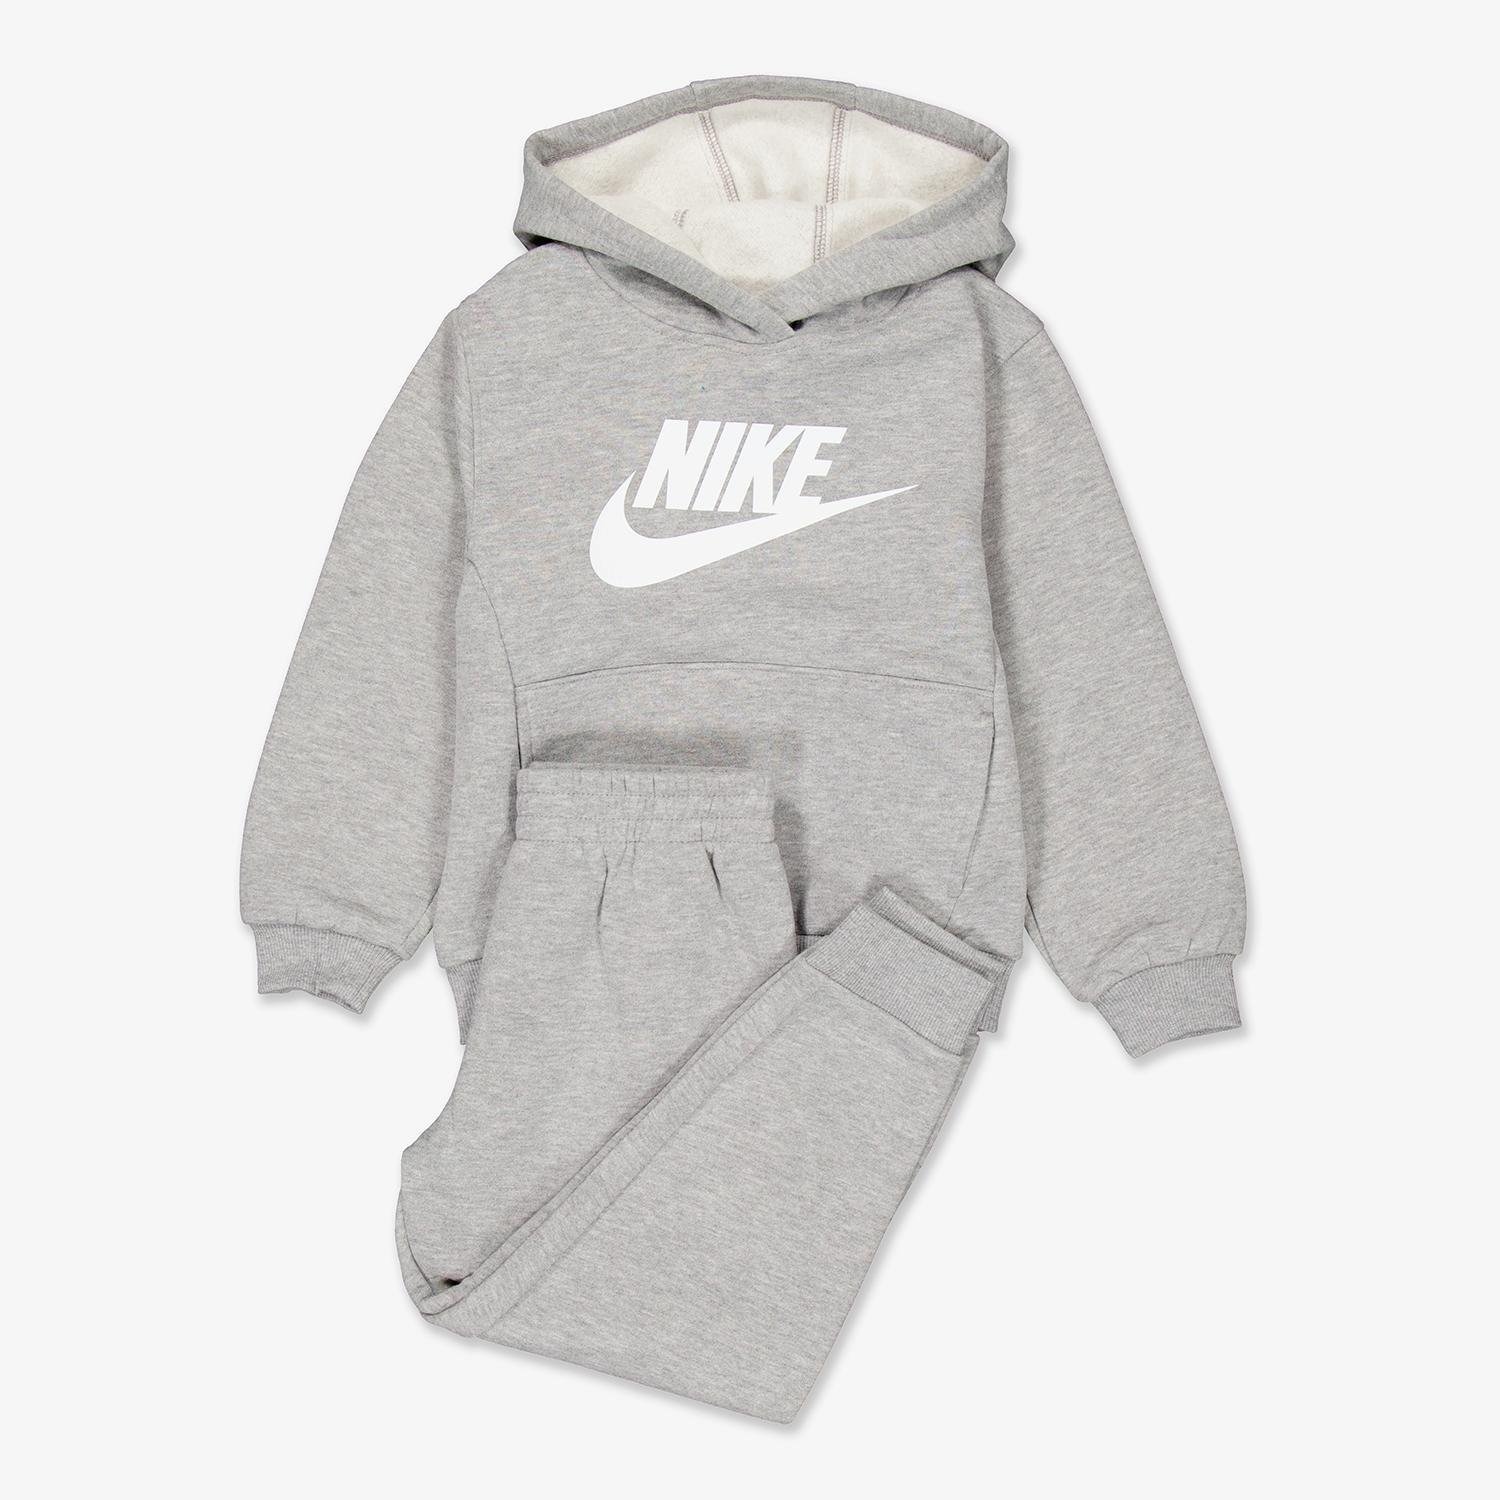 Nike Nike joggingpak grijs kinderen kinderen